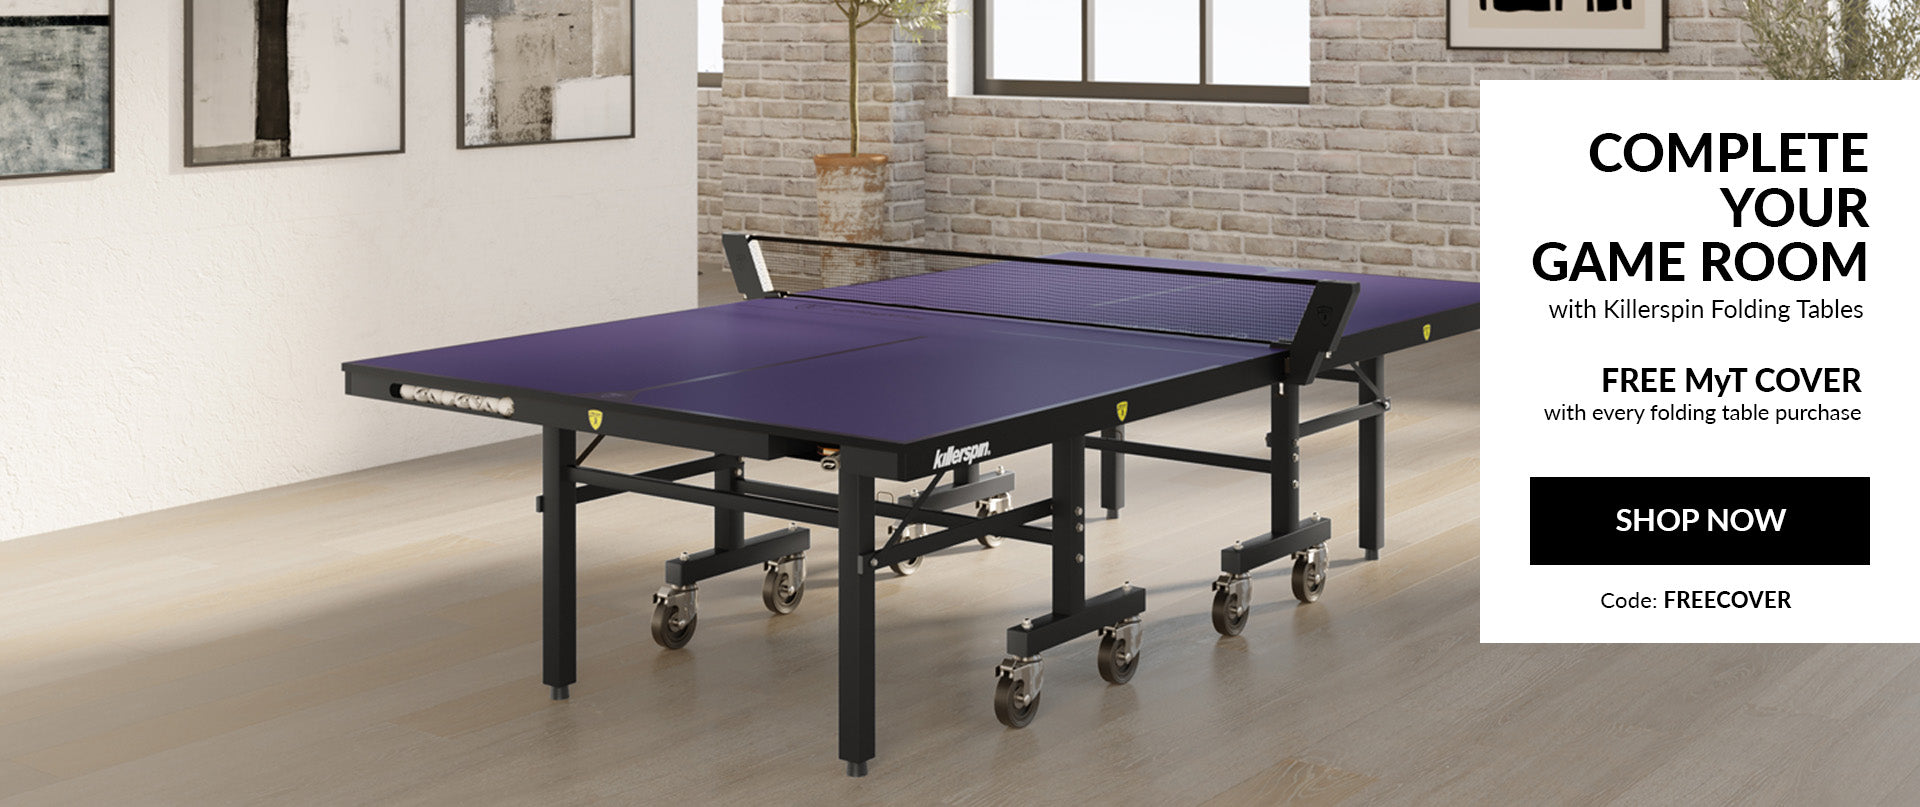 best table tennis online store